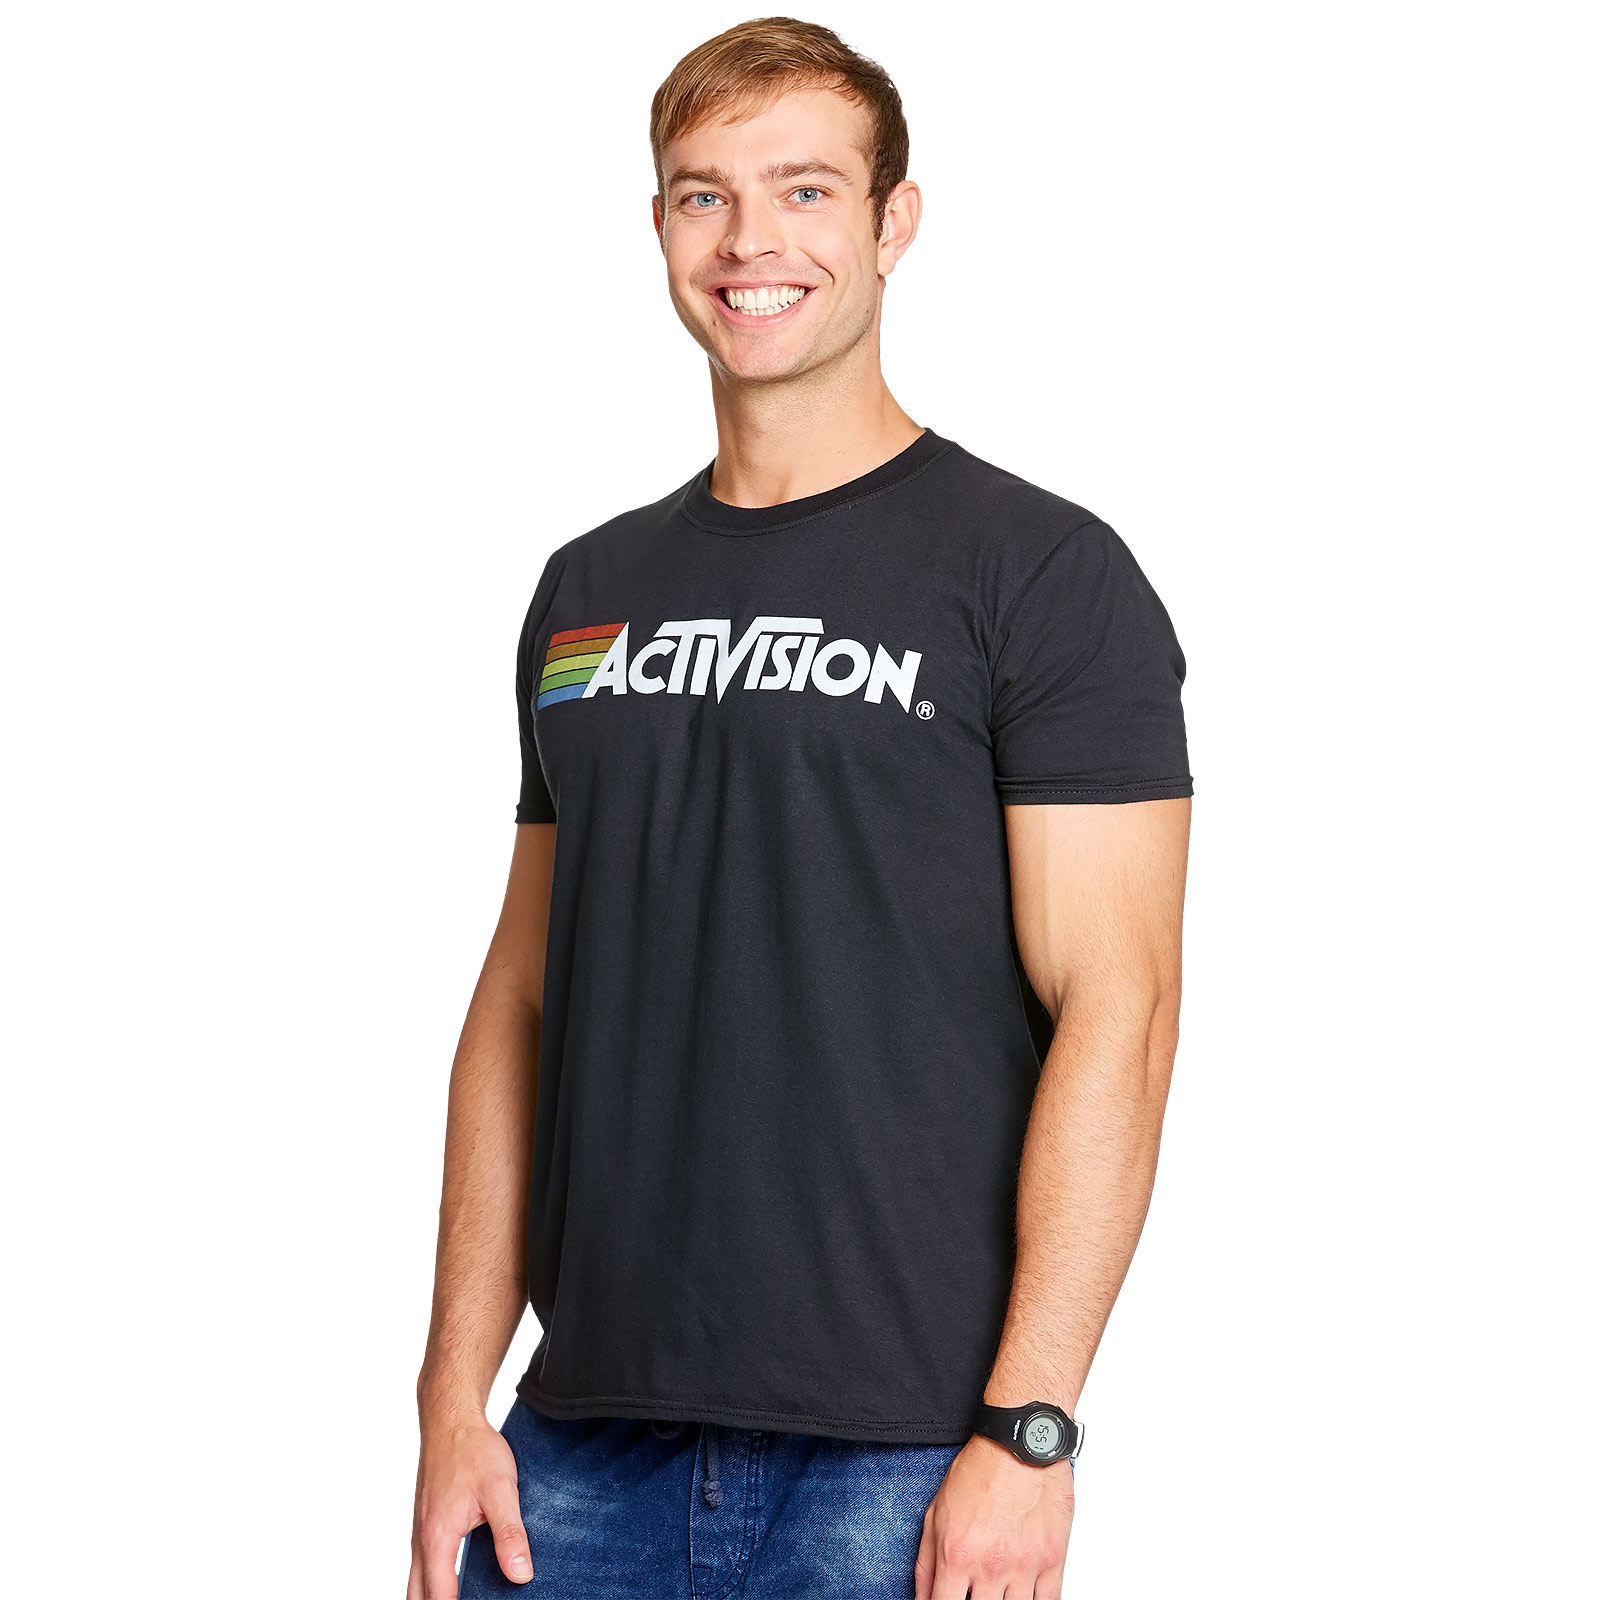 Activision - T-shirt logo noir